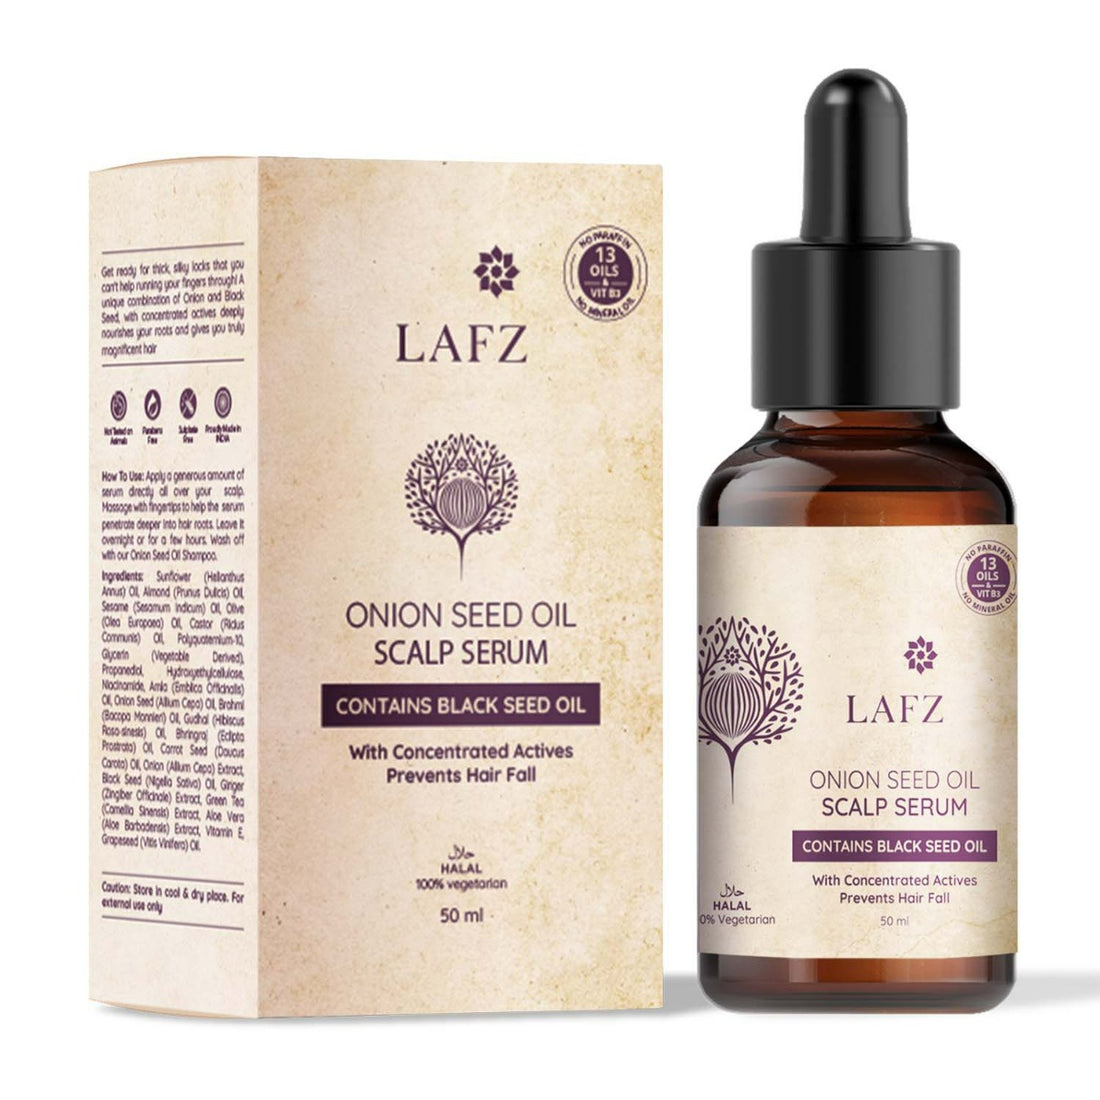 Lafz onion seed oil scalp serum (50ml)